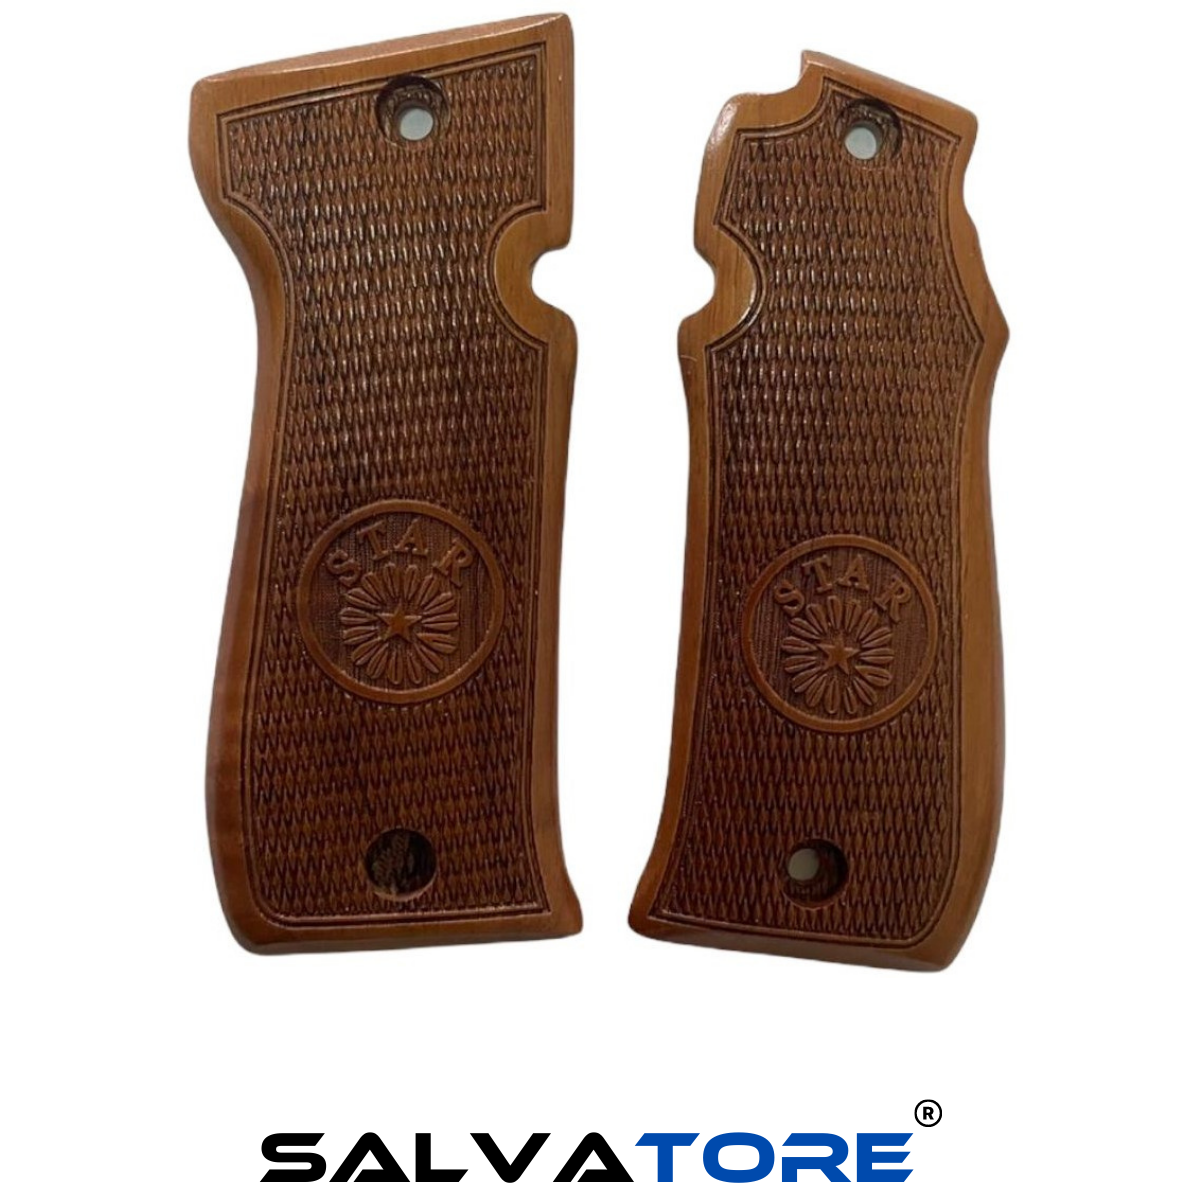 Salvatore Pistol Grips Revolver Grips For Star 7.65 Walnut Gun Accessories Hunting Shooting